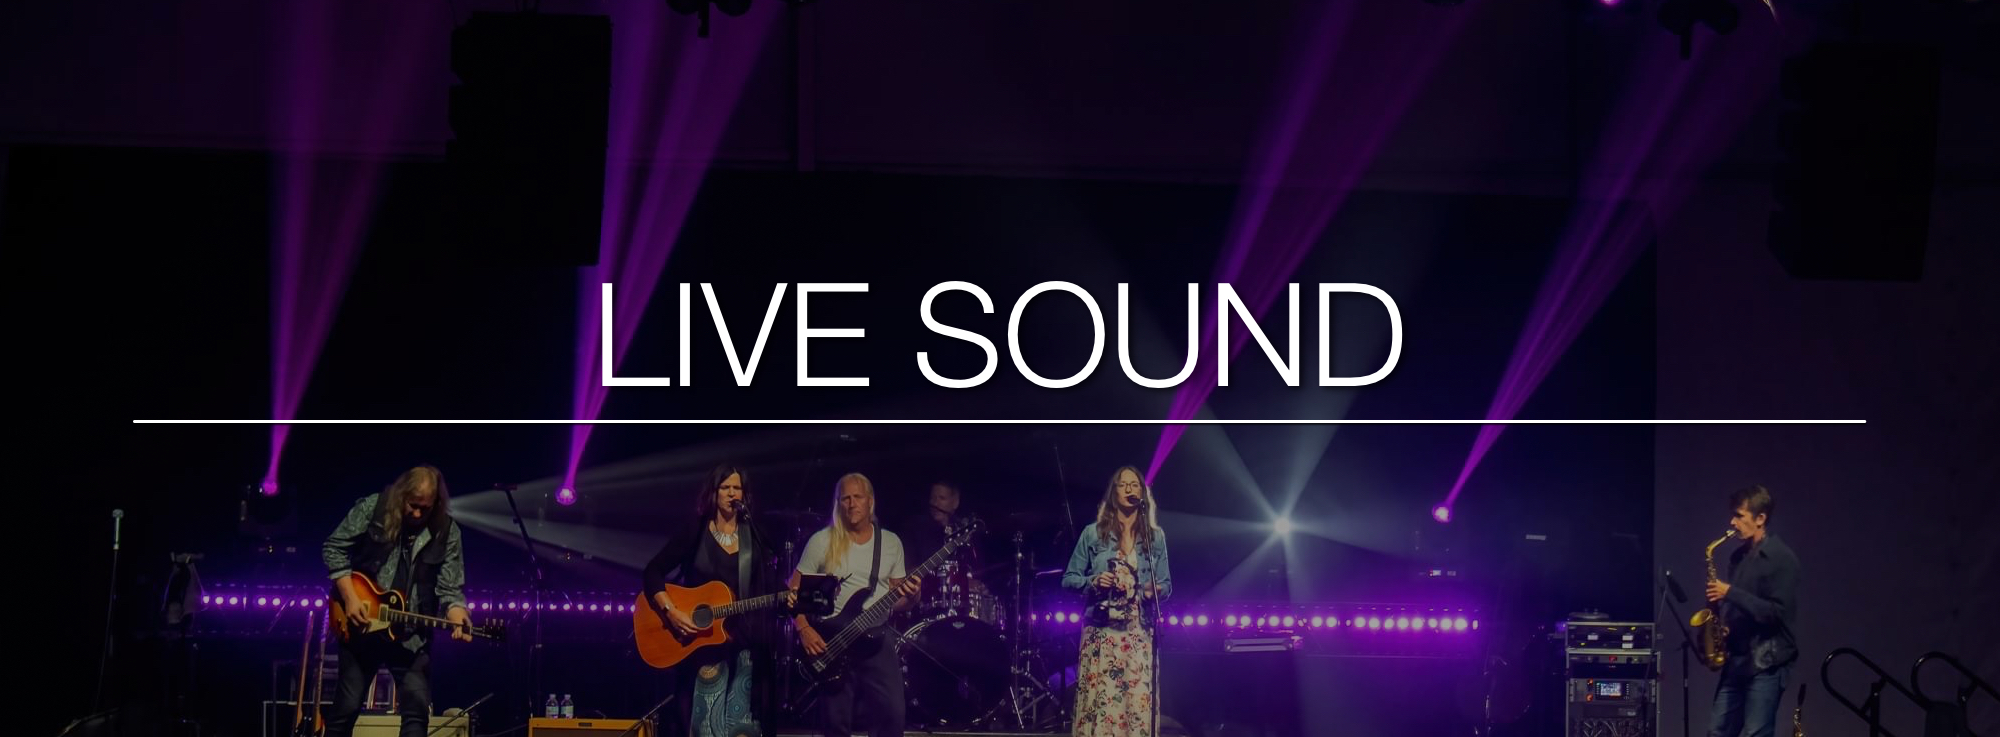 Audio Events, live sound, concerts, corporate